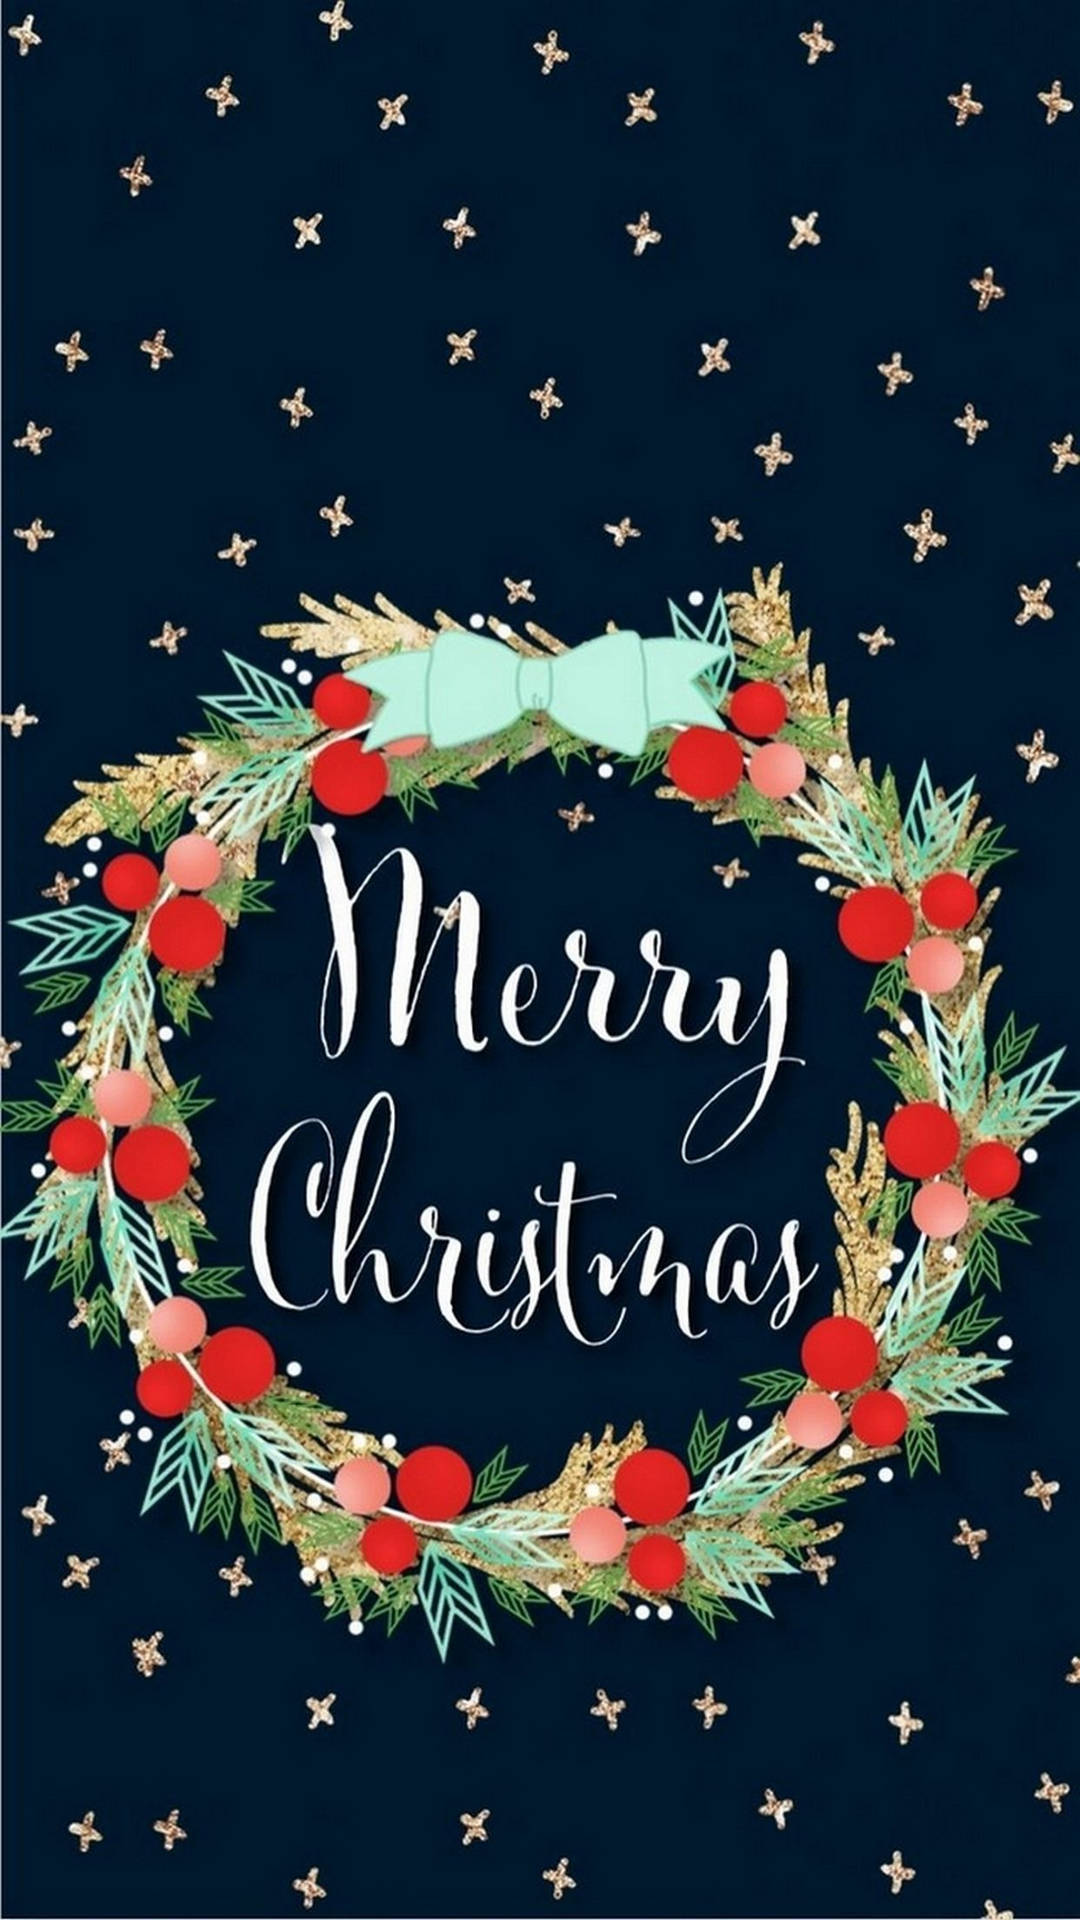 Merry Christmas Greetings IPhone Wallpaper